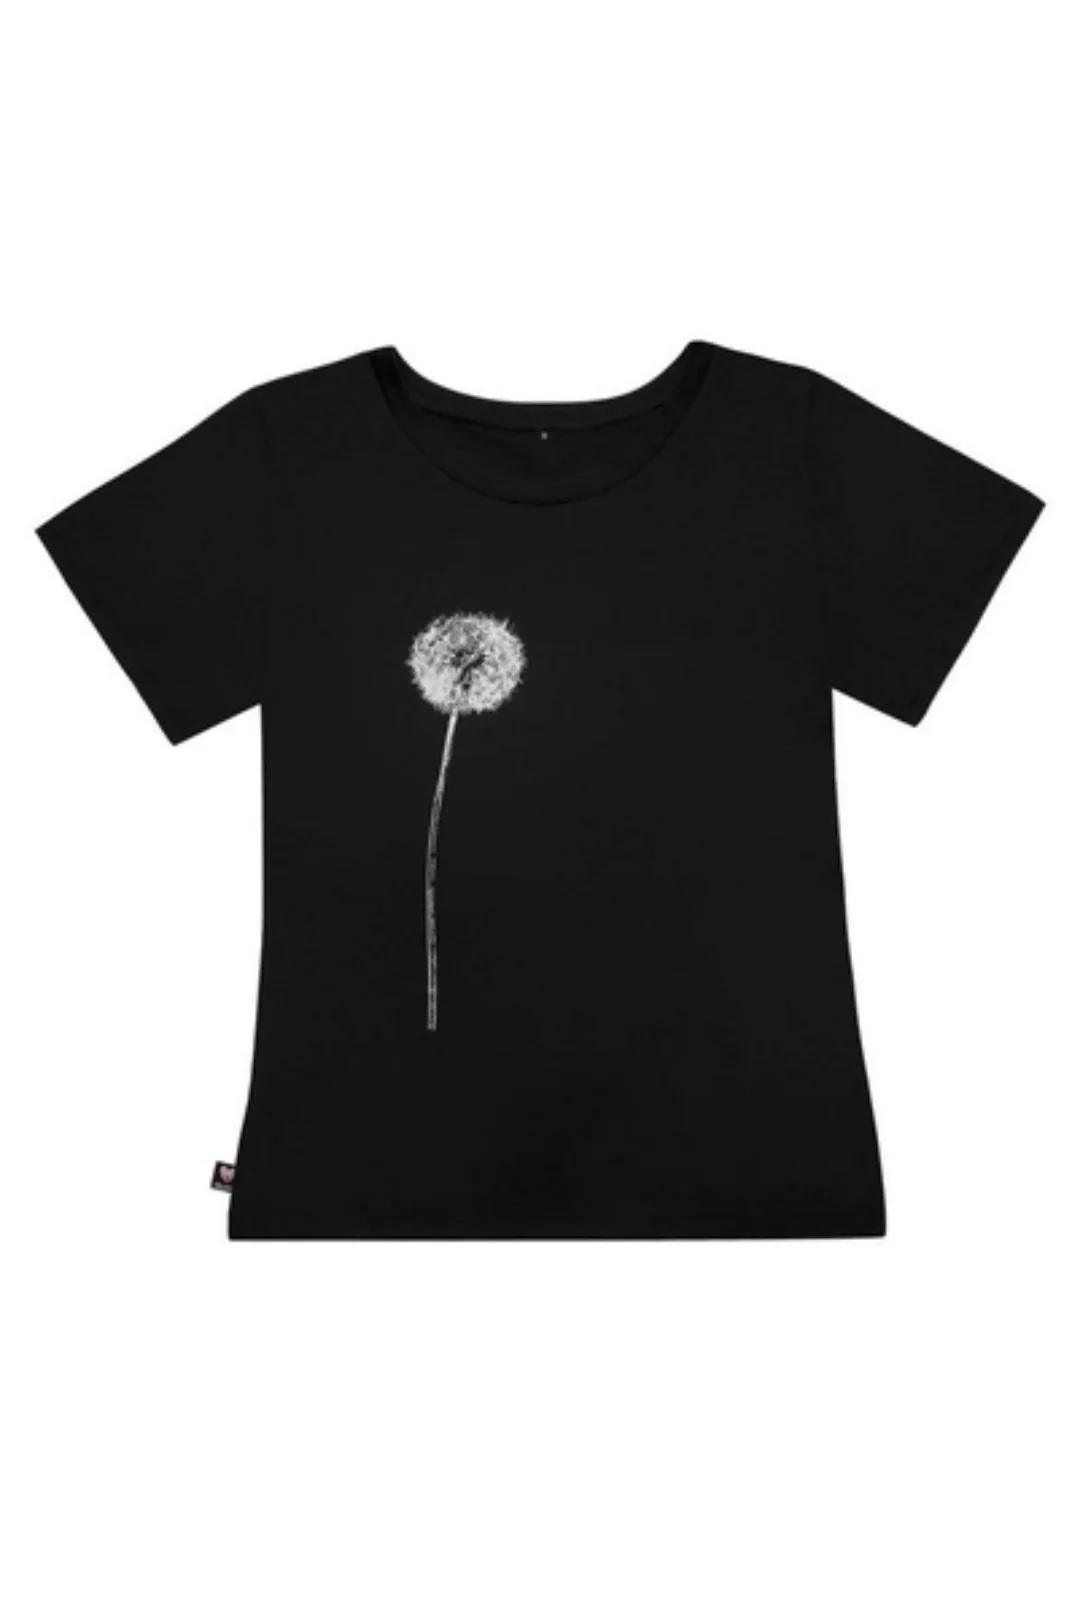 Fair-trade-frauenshirt "Pusteblume" - Made In Kenia - günstig online kaufen